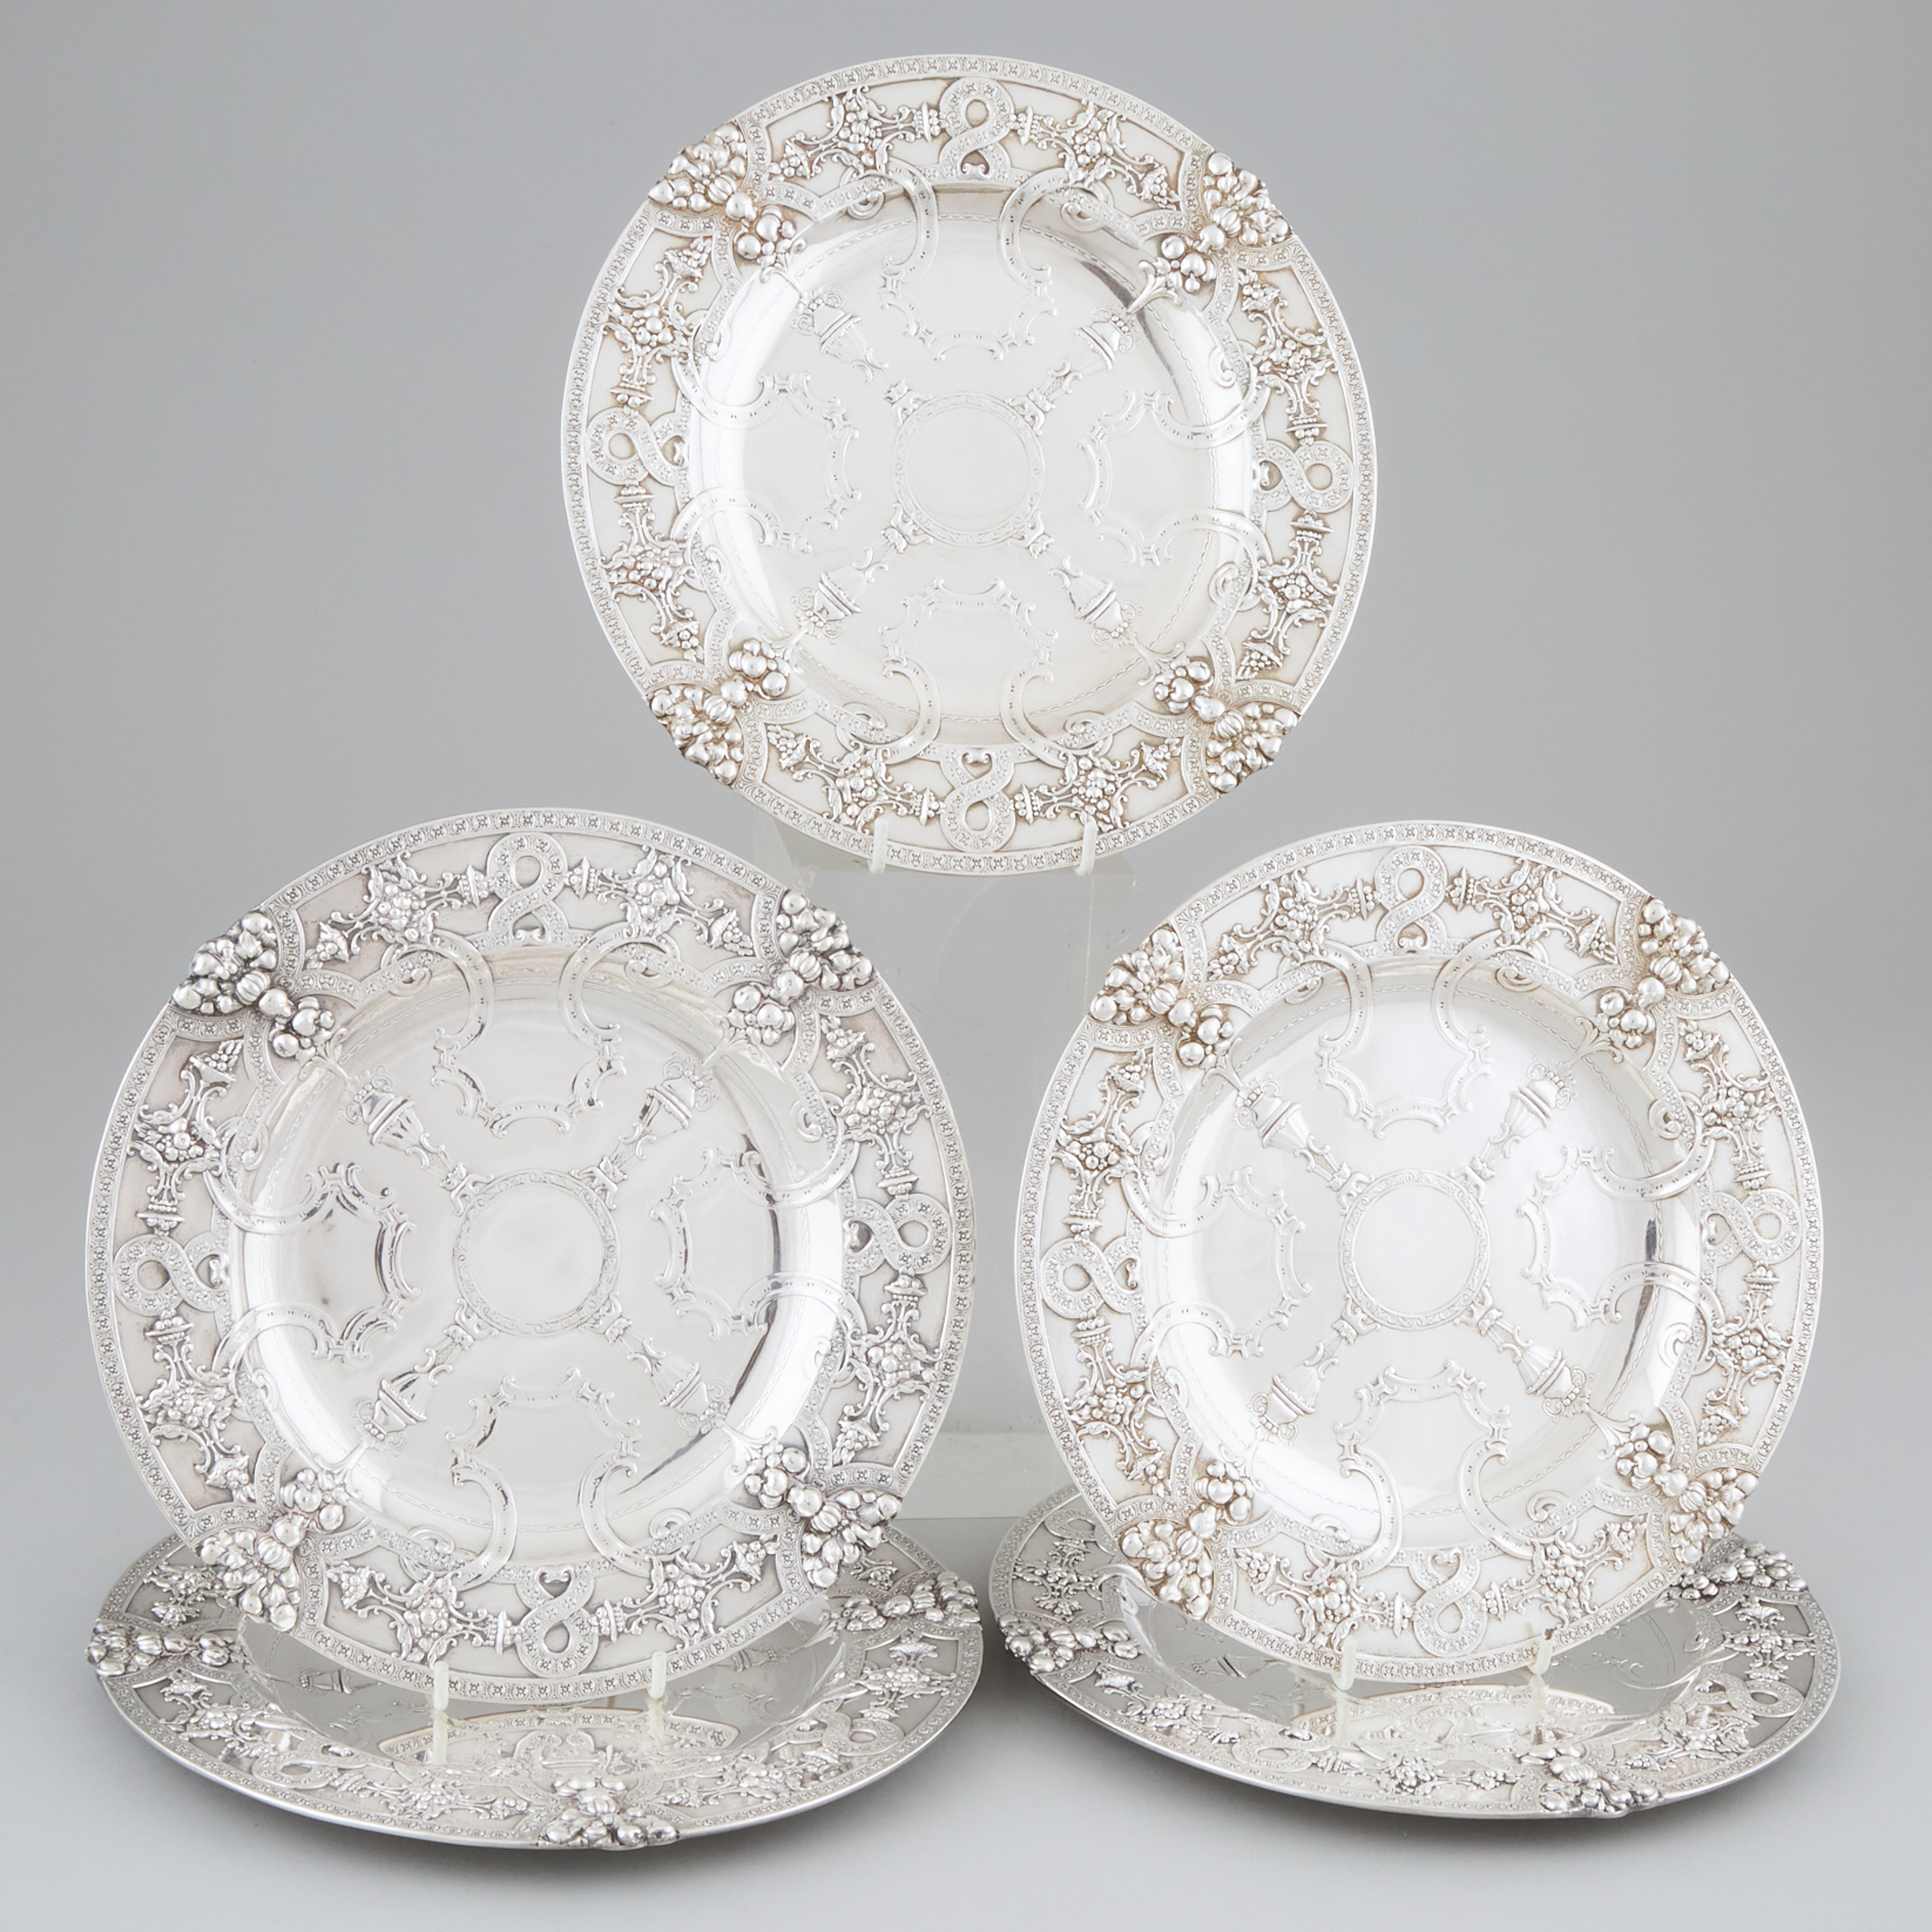 Five American Silver 'Renaissance' Service Plates, Tiffany & Co., New York, N.Y., c.1907-38